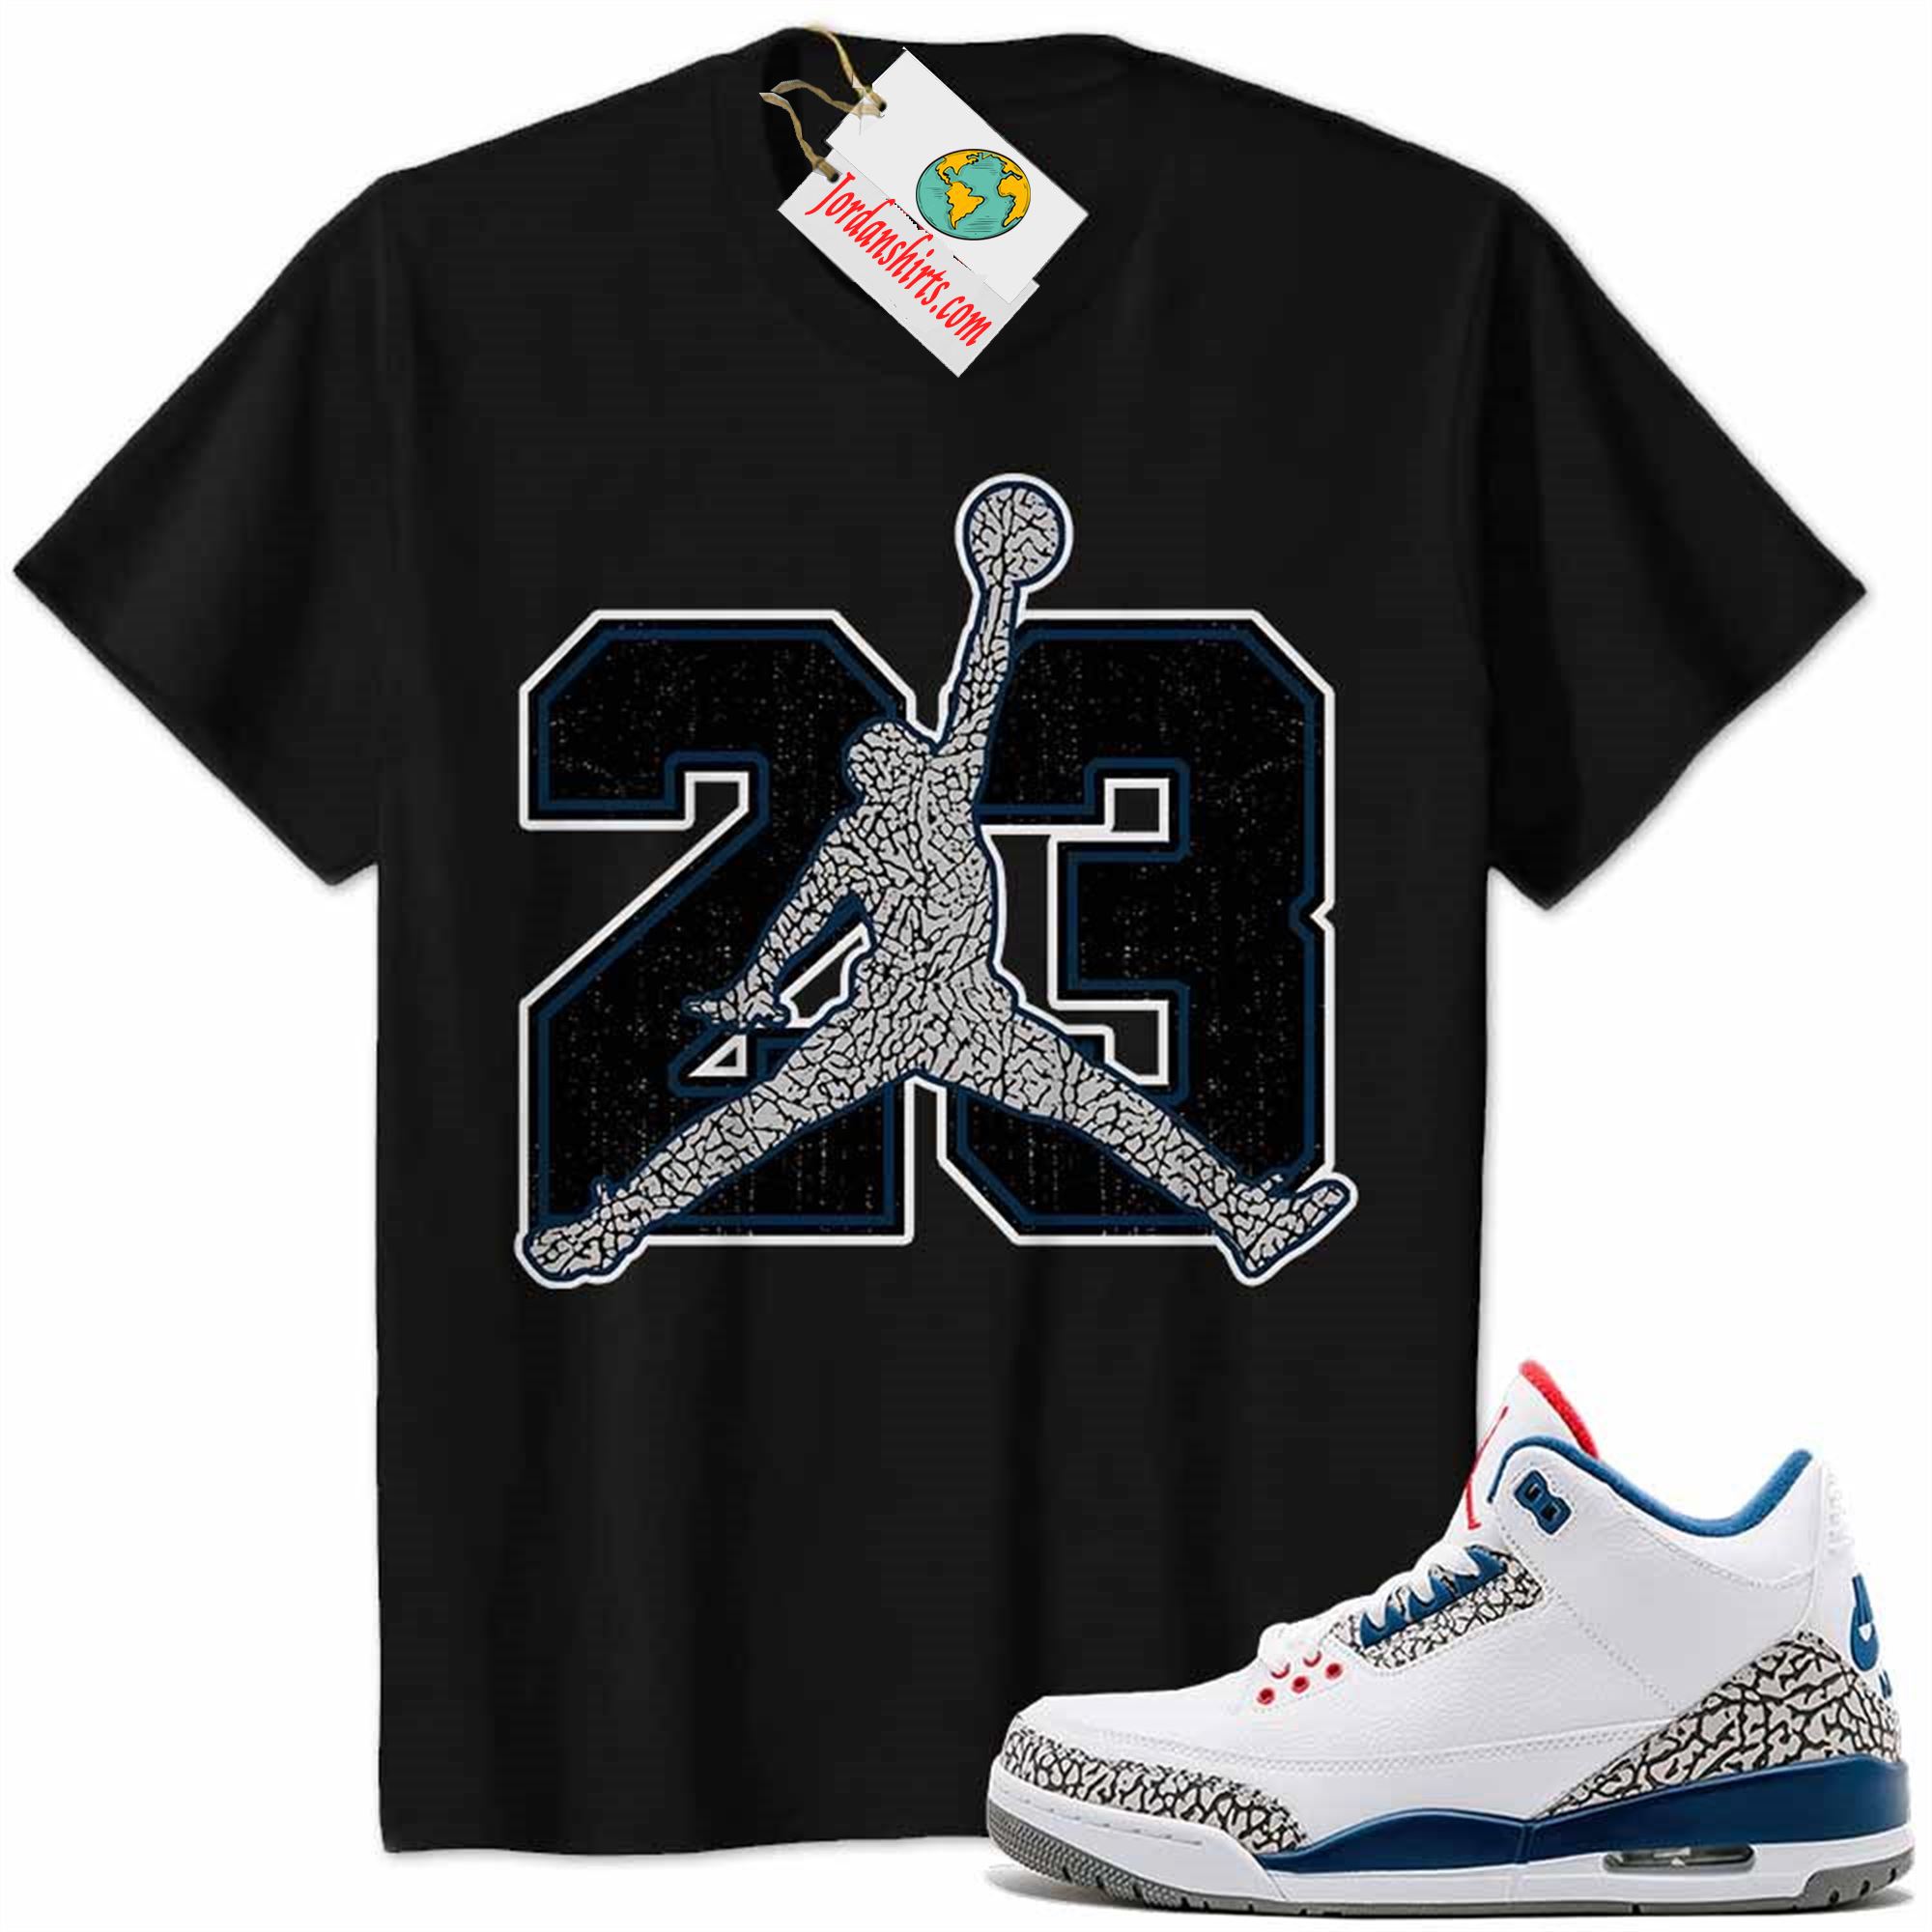 Jordan 3 Shirt, Jordan 3 True Blue Shirt Jumpman No23 Black Size Up To 5xl